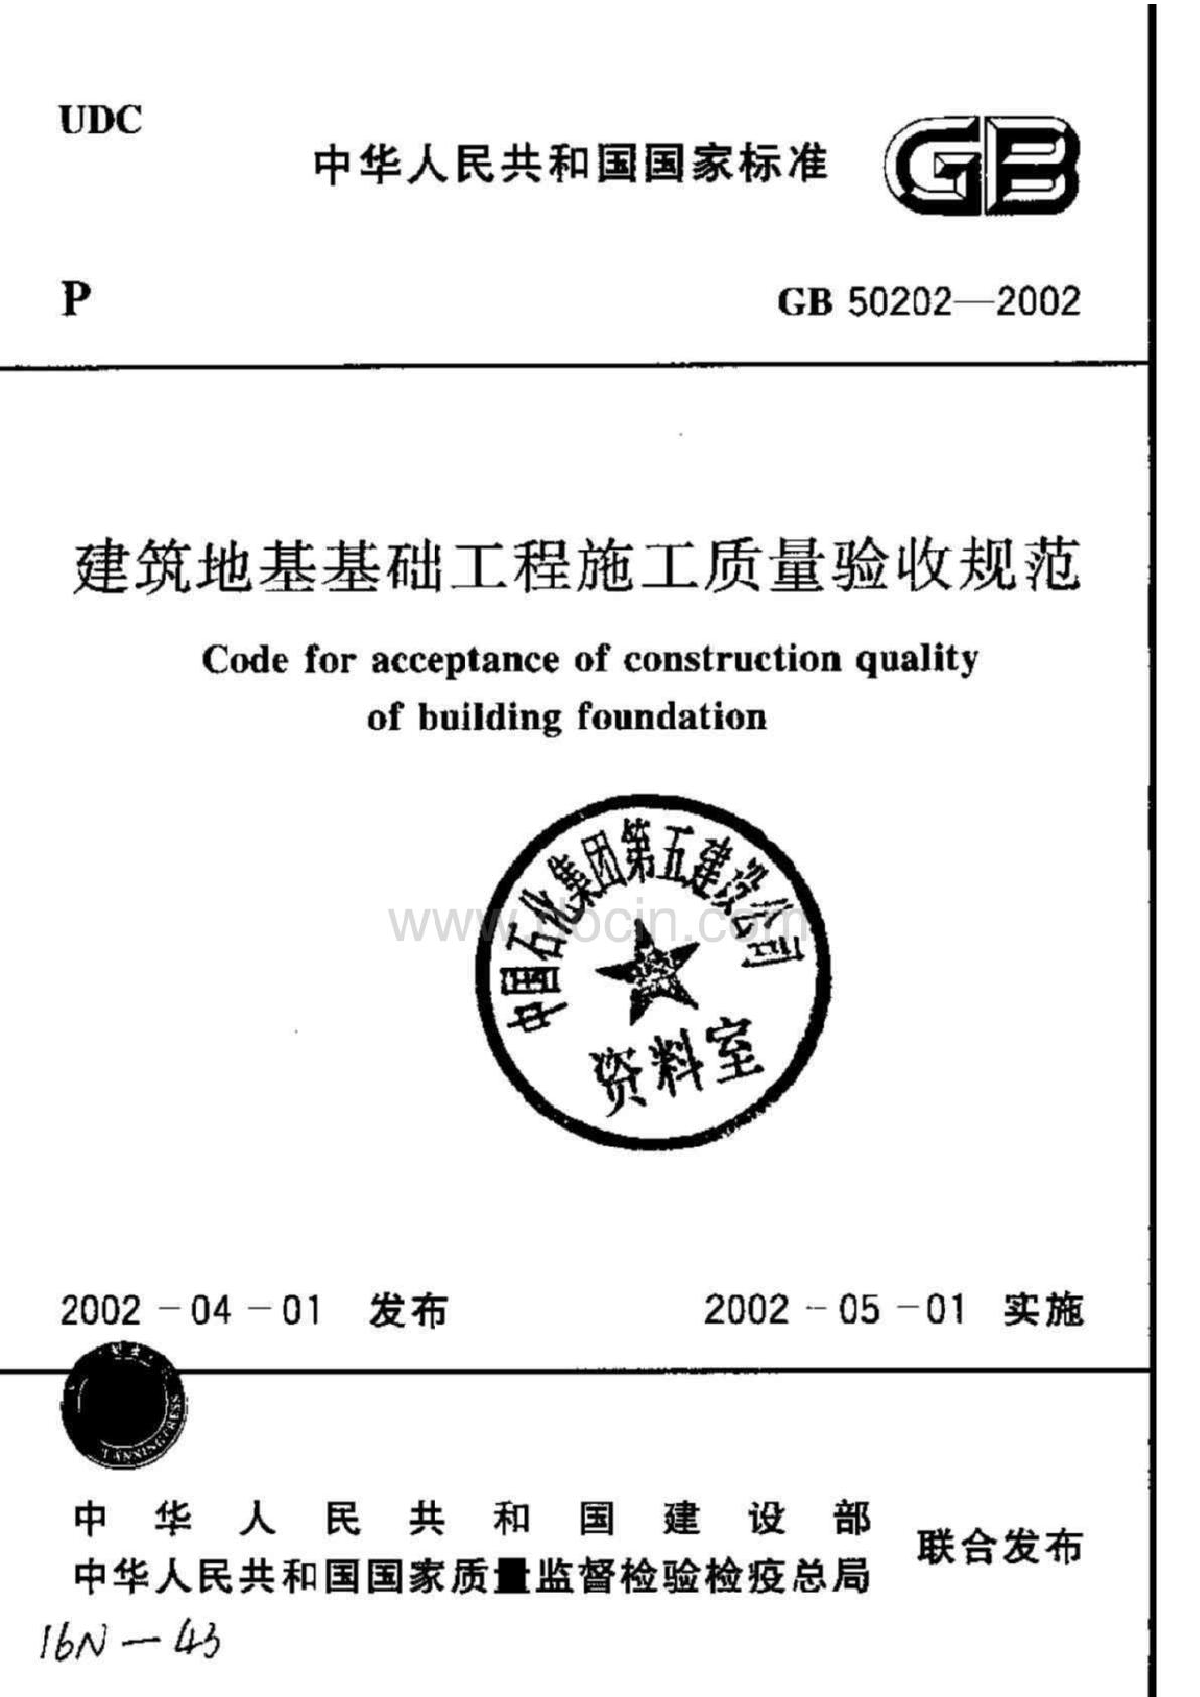 【GB 50202-2002】《建筑地基基础工程施工质量验收规范》含说明-图一